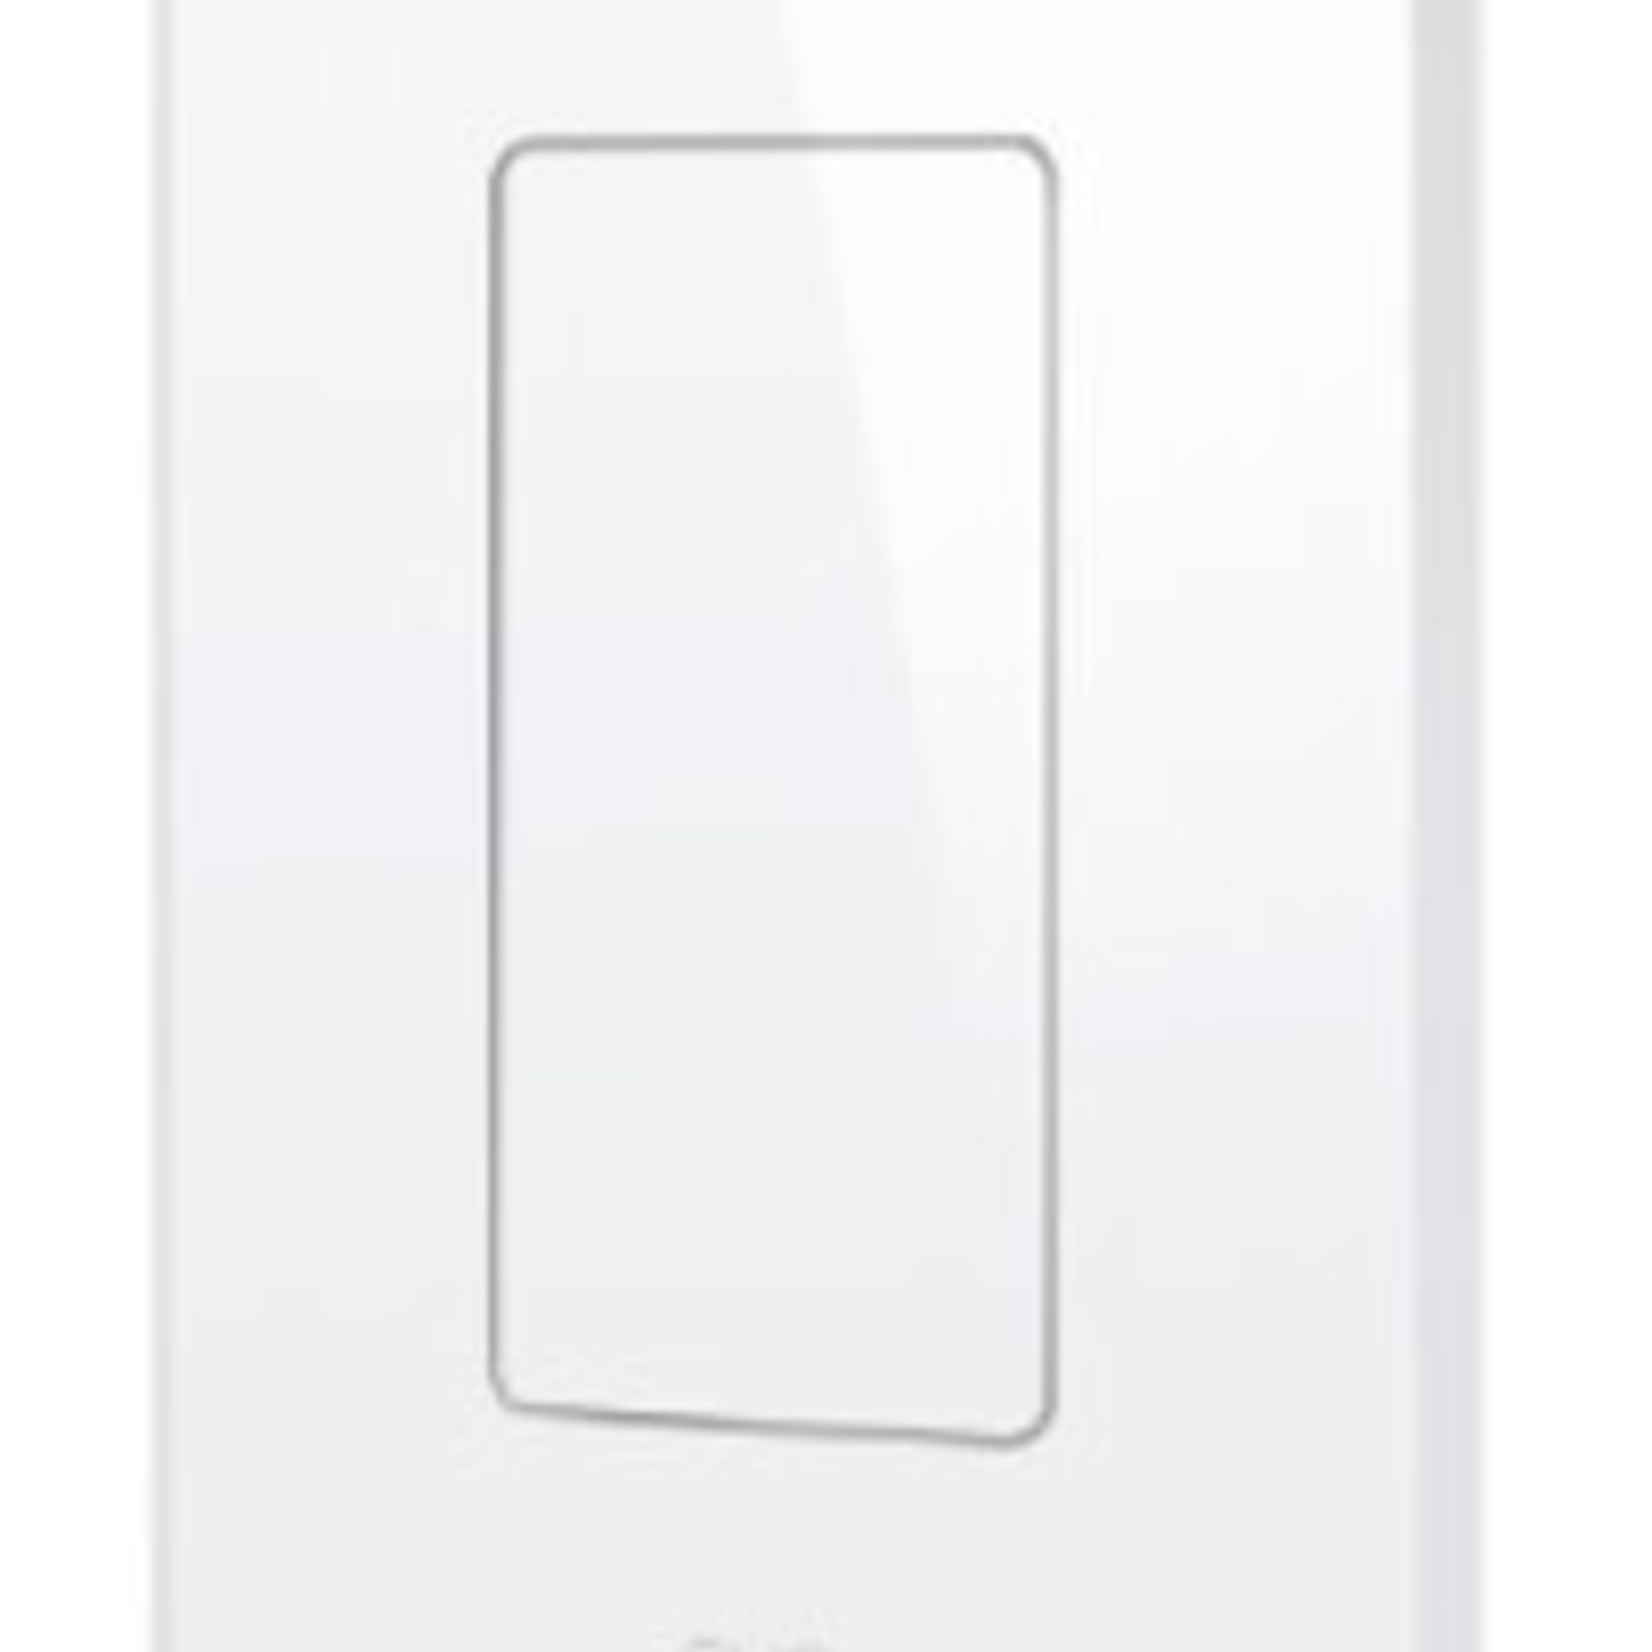 eve light switch (HomeKit)